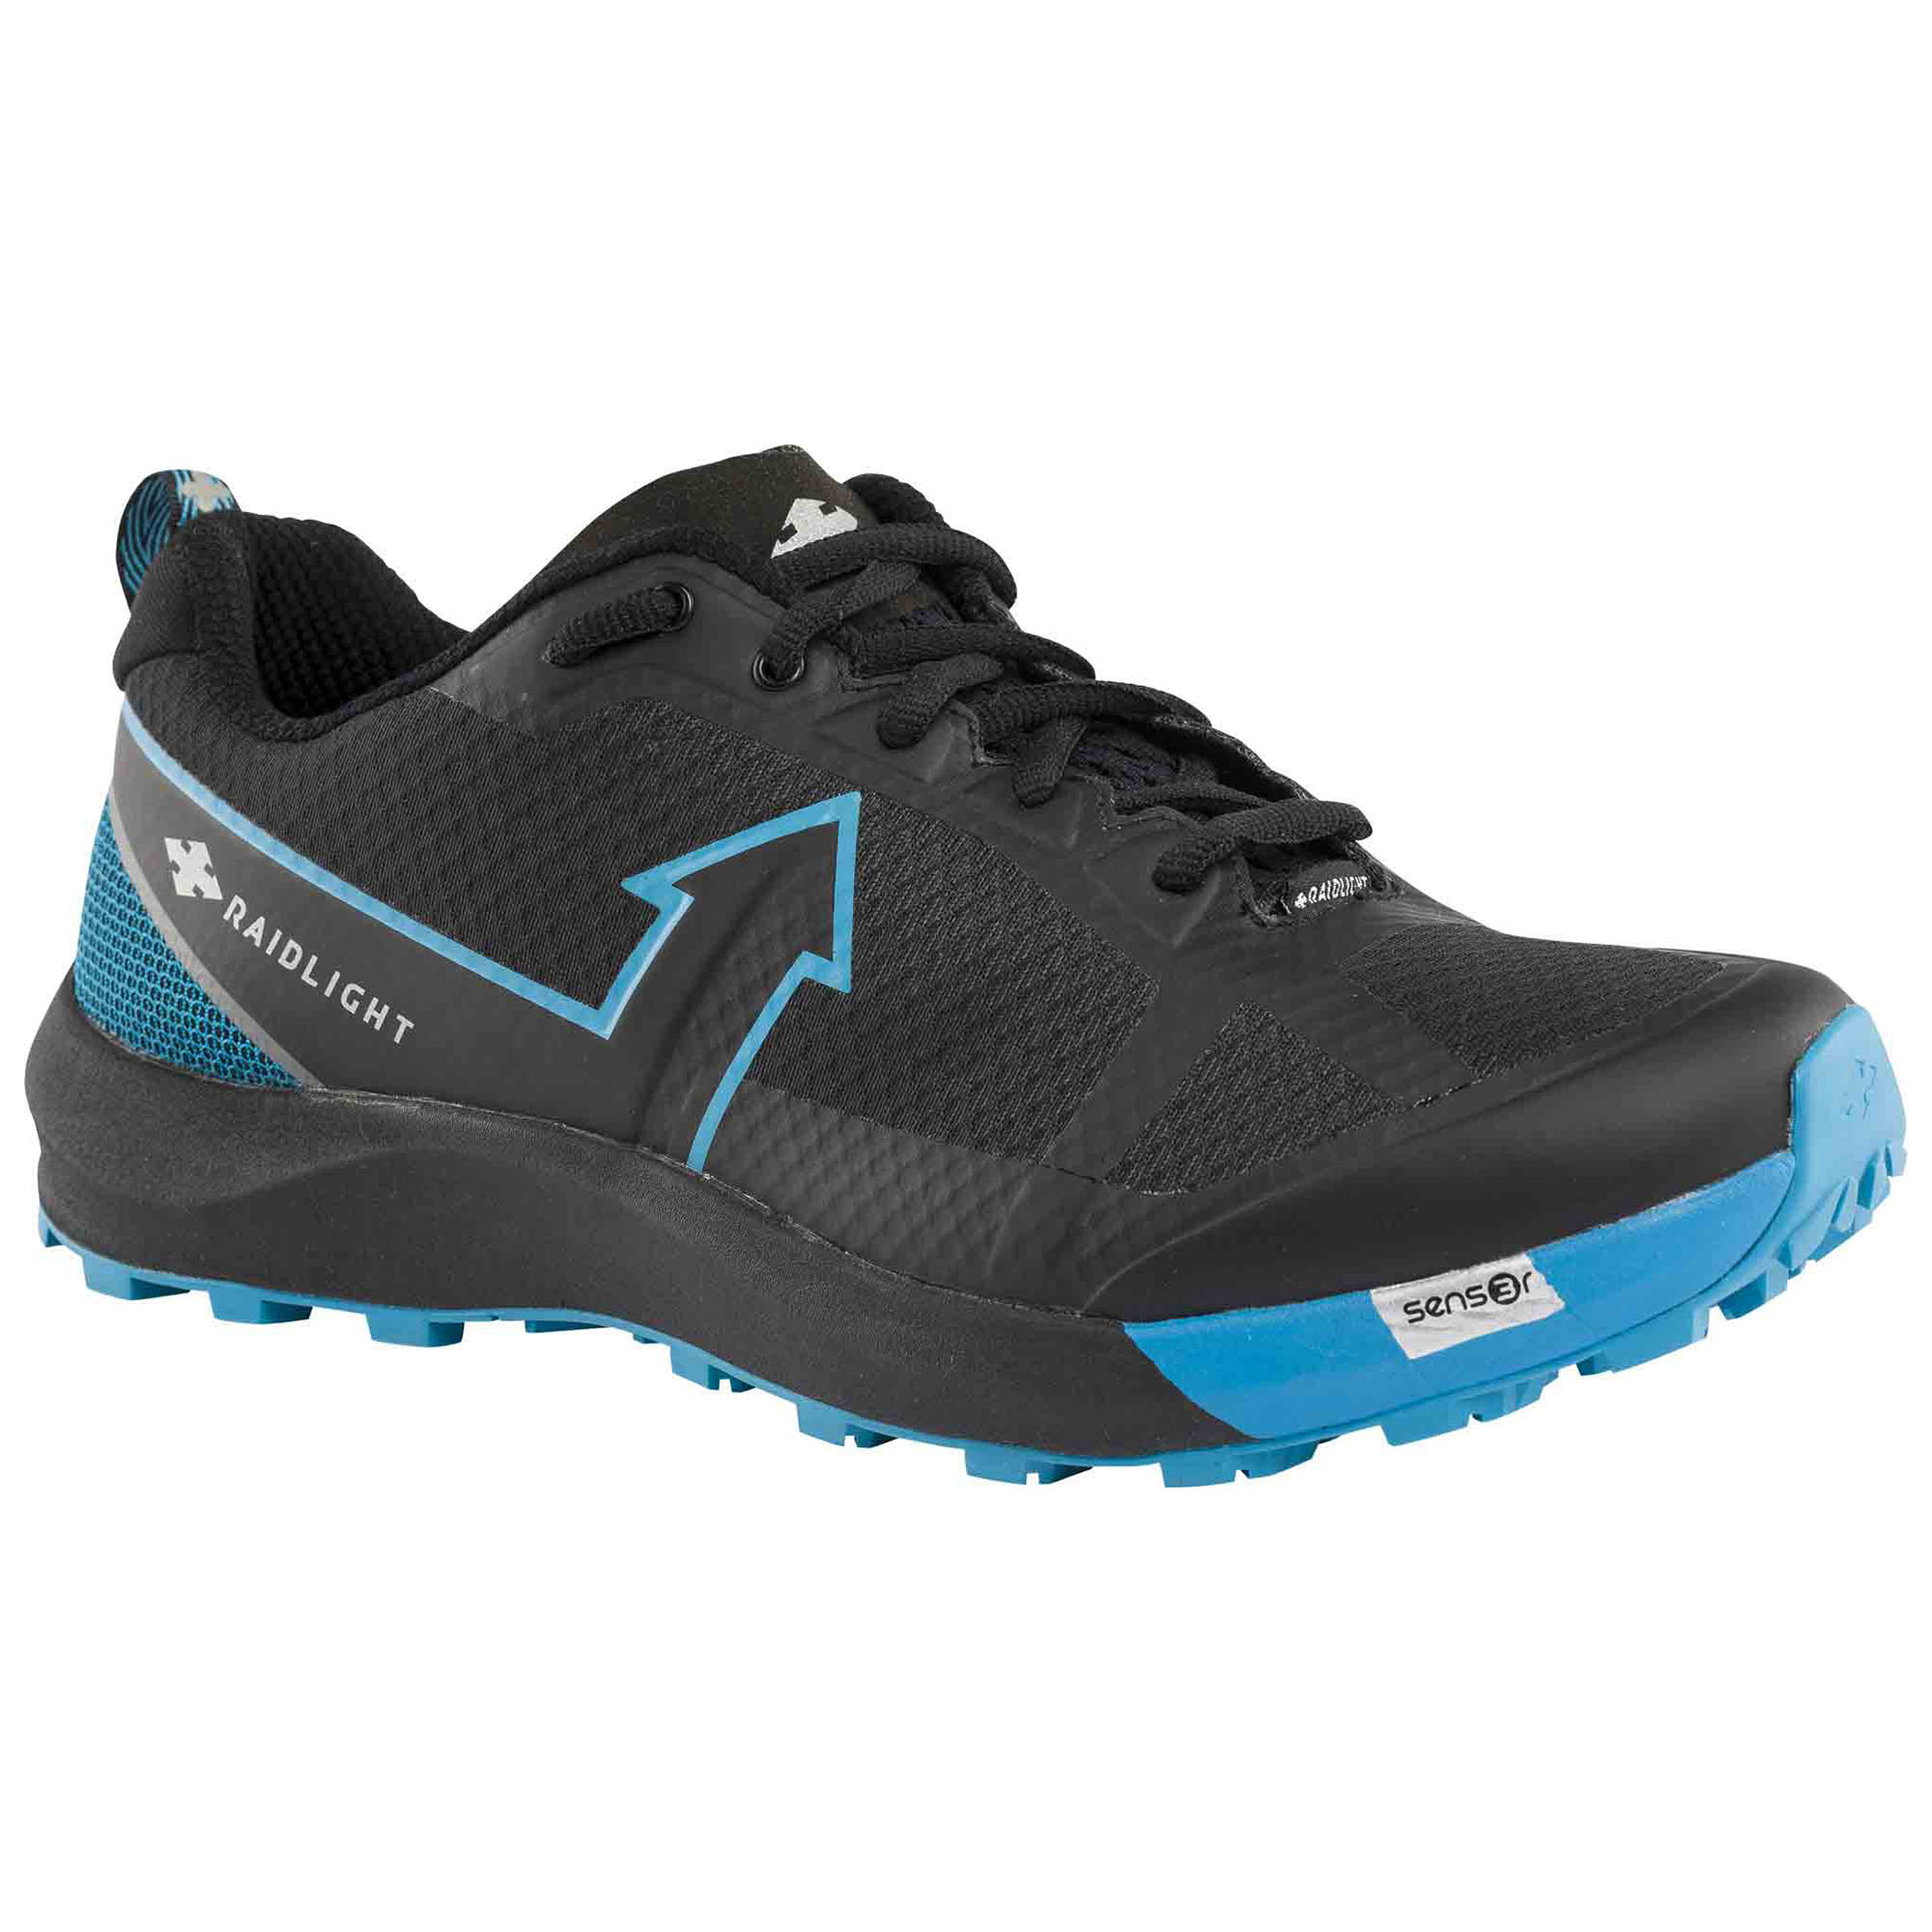 Raidlight Responsiv XP Trail Running Shoes - Sun & Ski Sports